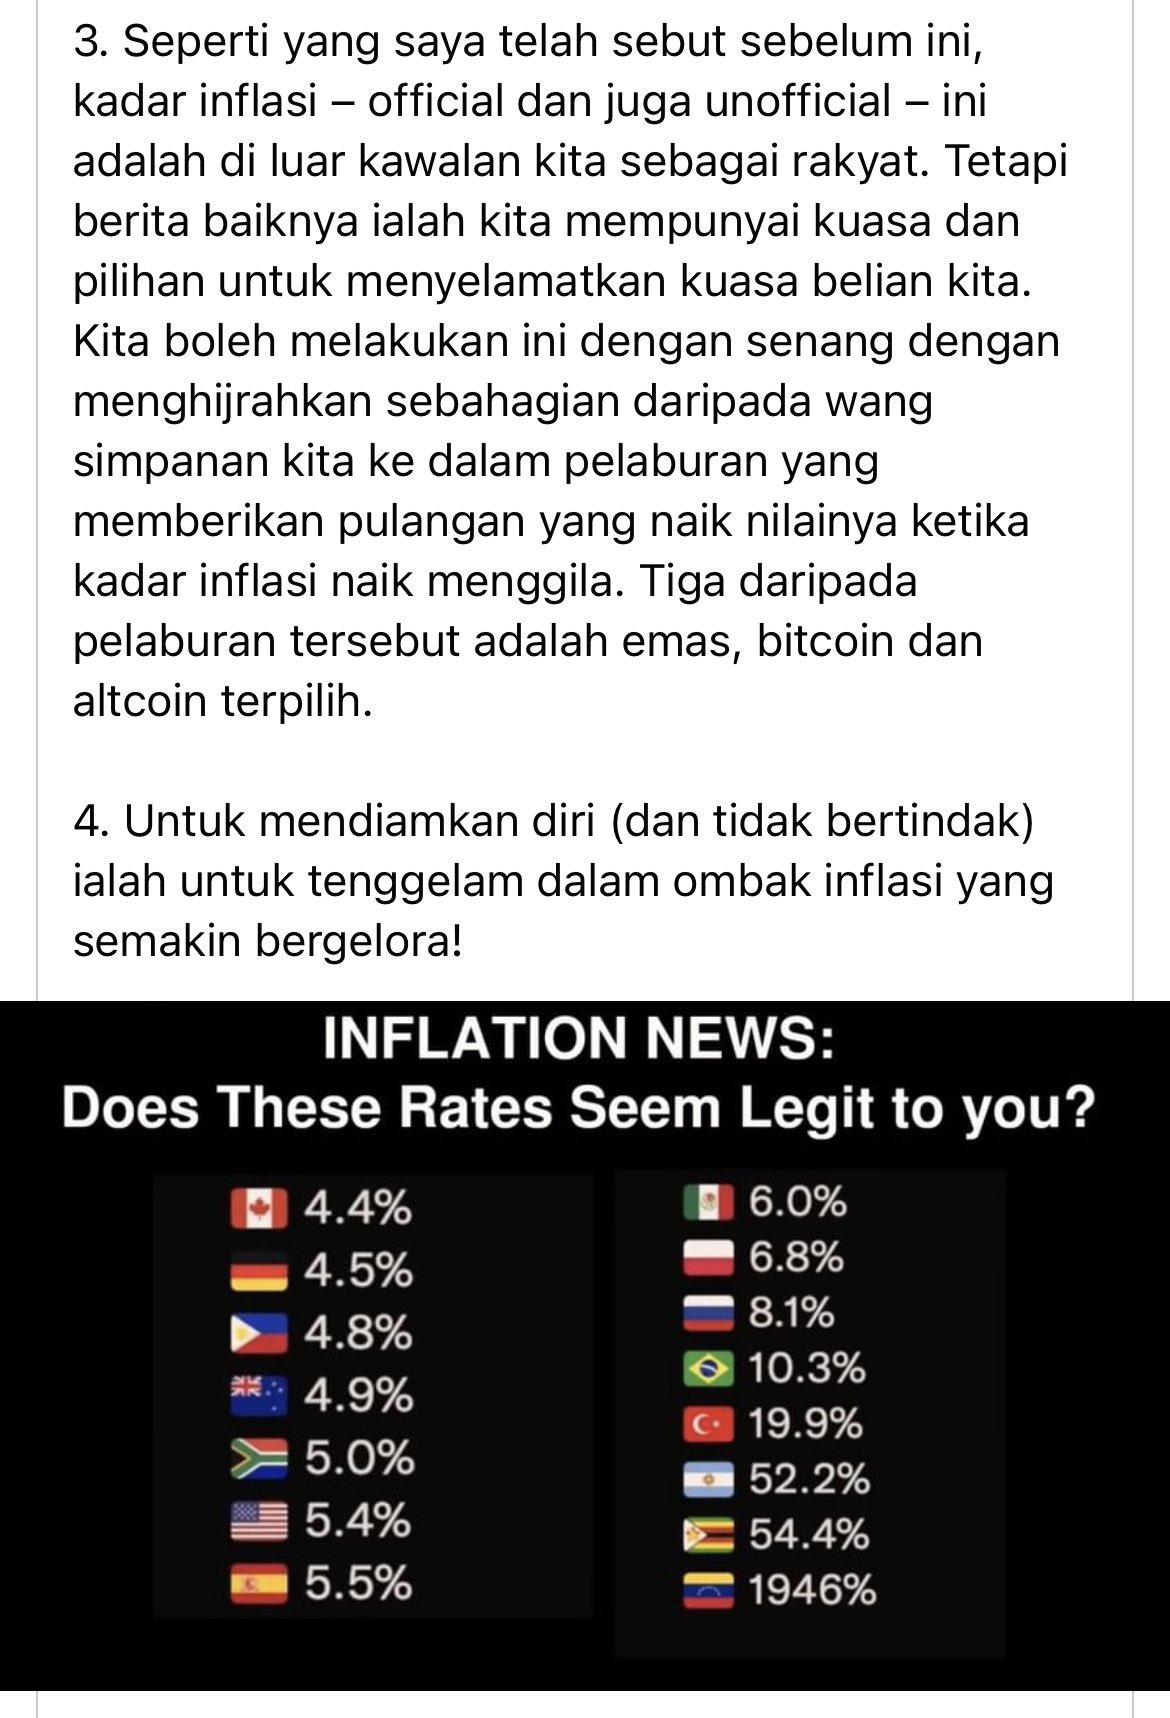 Inflasi maksud